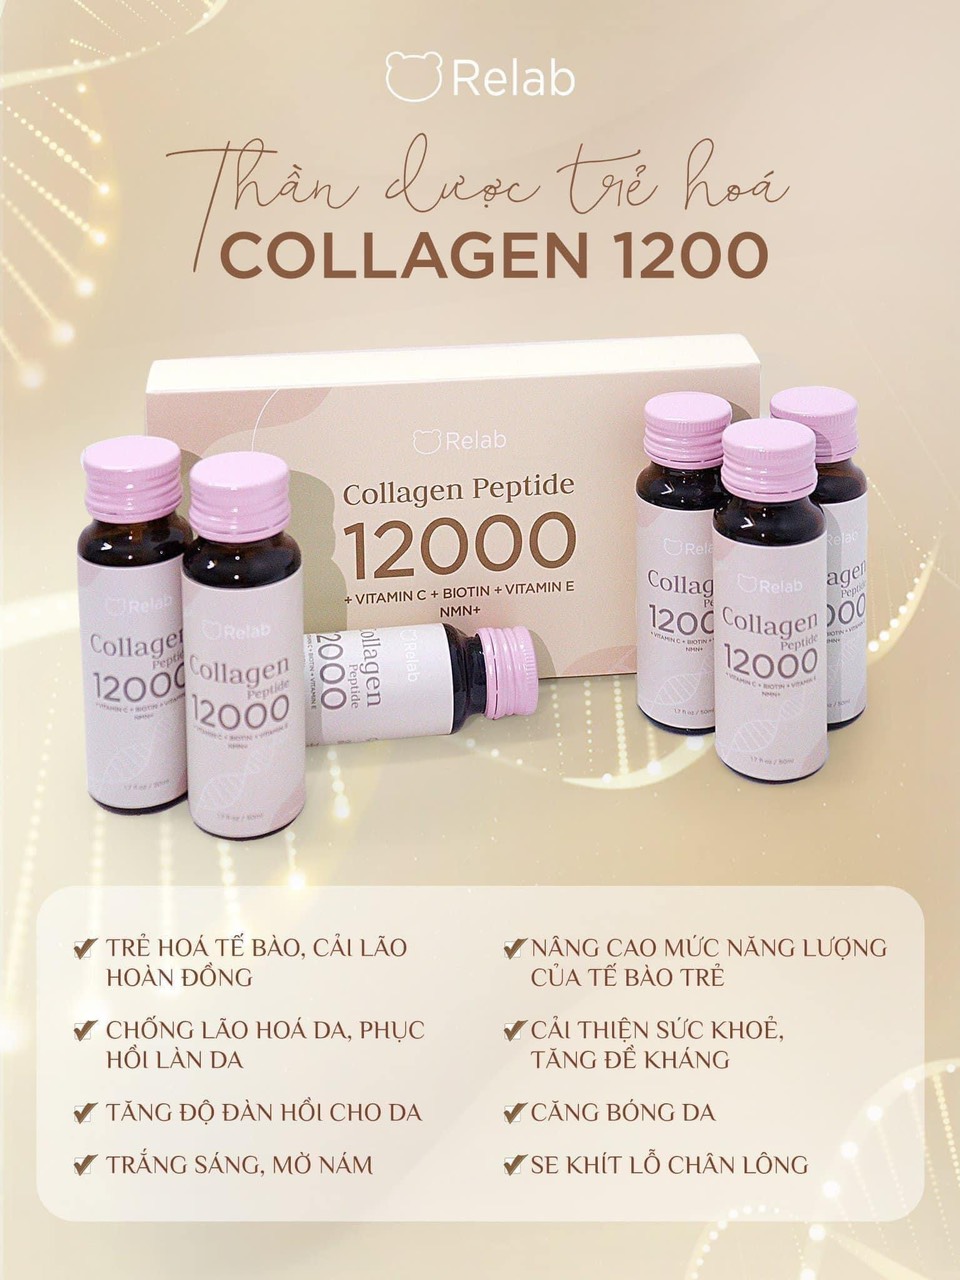 collagen-relab-chong-lao-hoa-lieu-trinh-5-hop-2-thang-uong-collagen-relab-12000mg